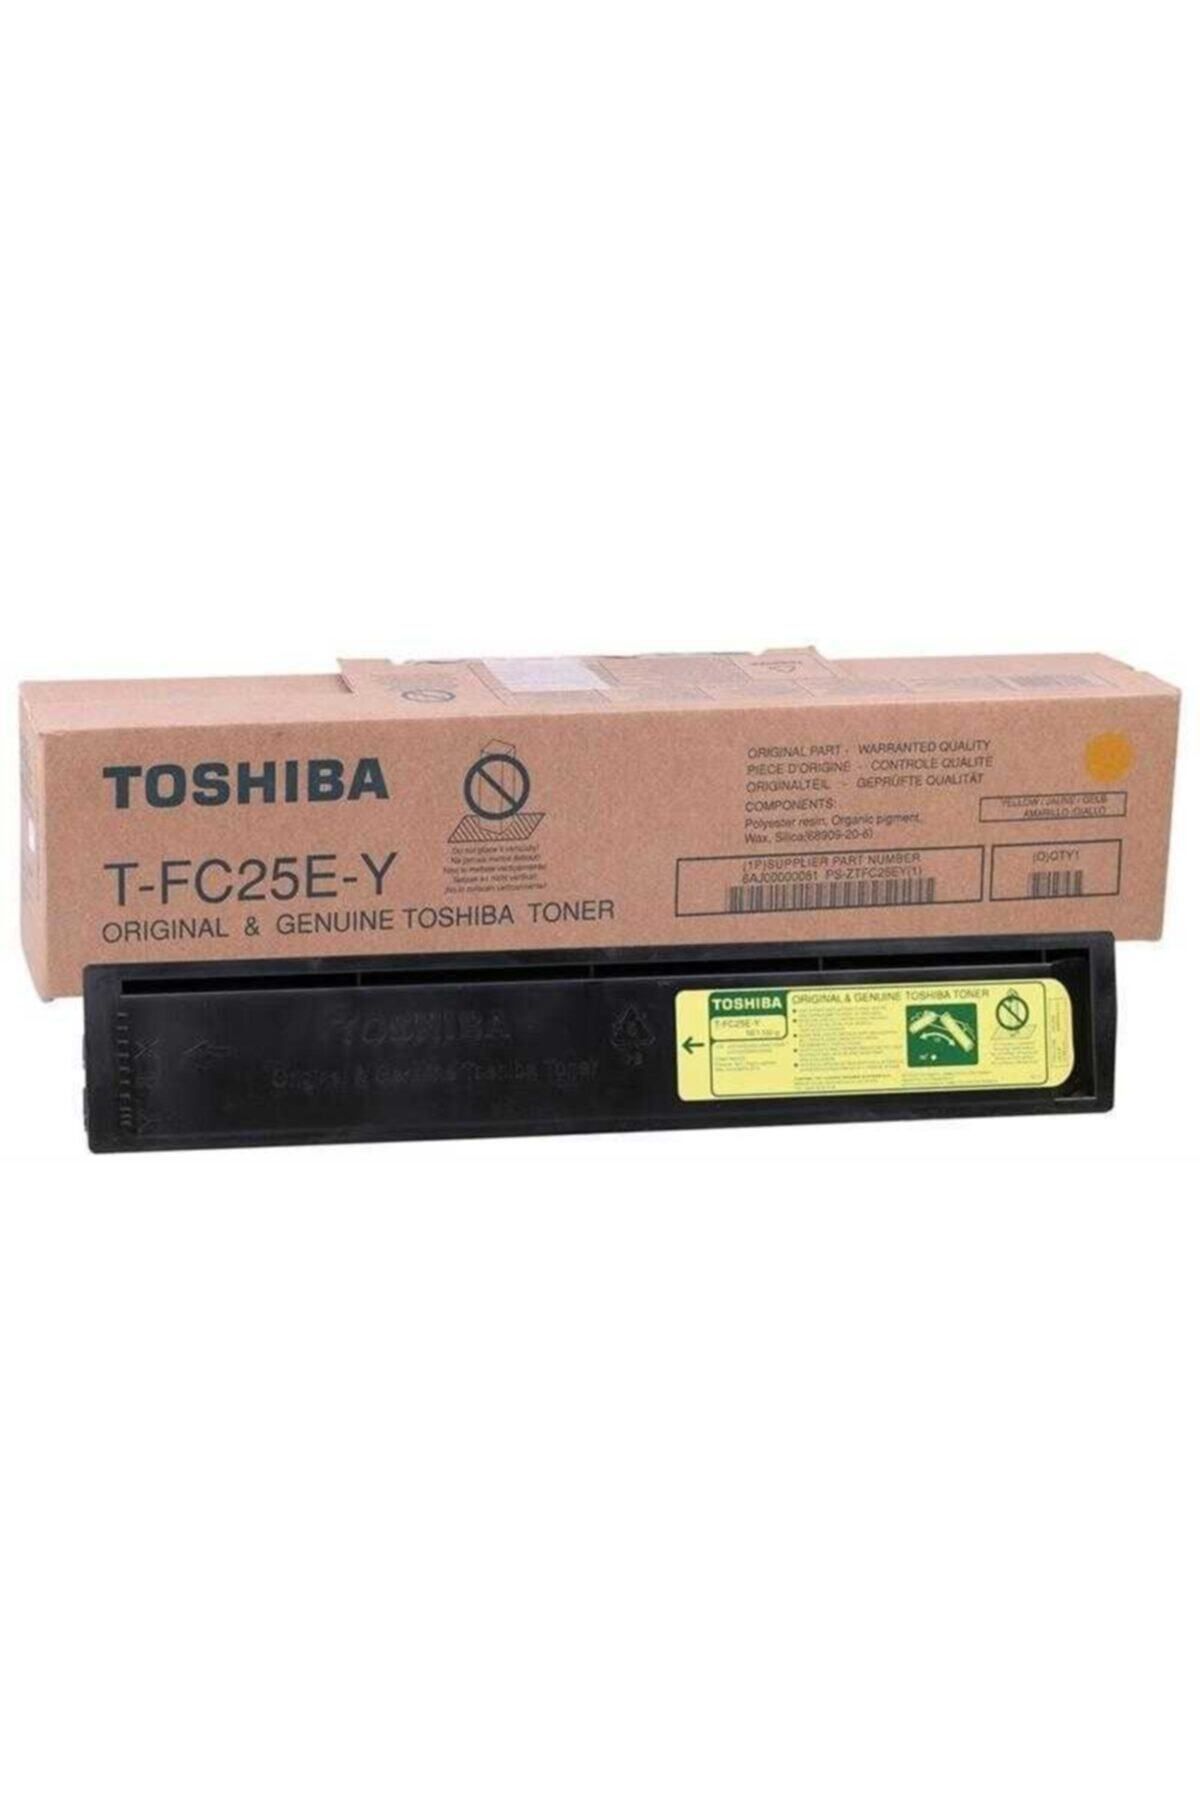 Toshiba T-fc25e-y Sarı Fotokopi Toner